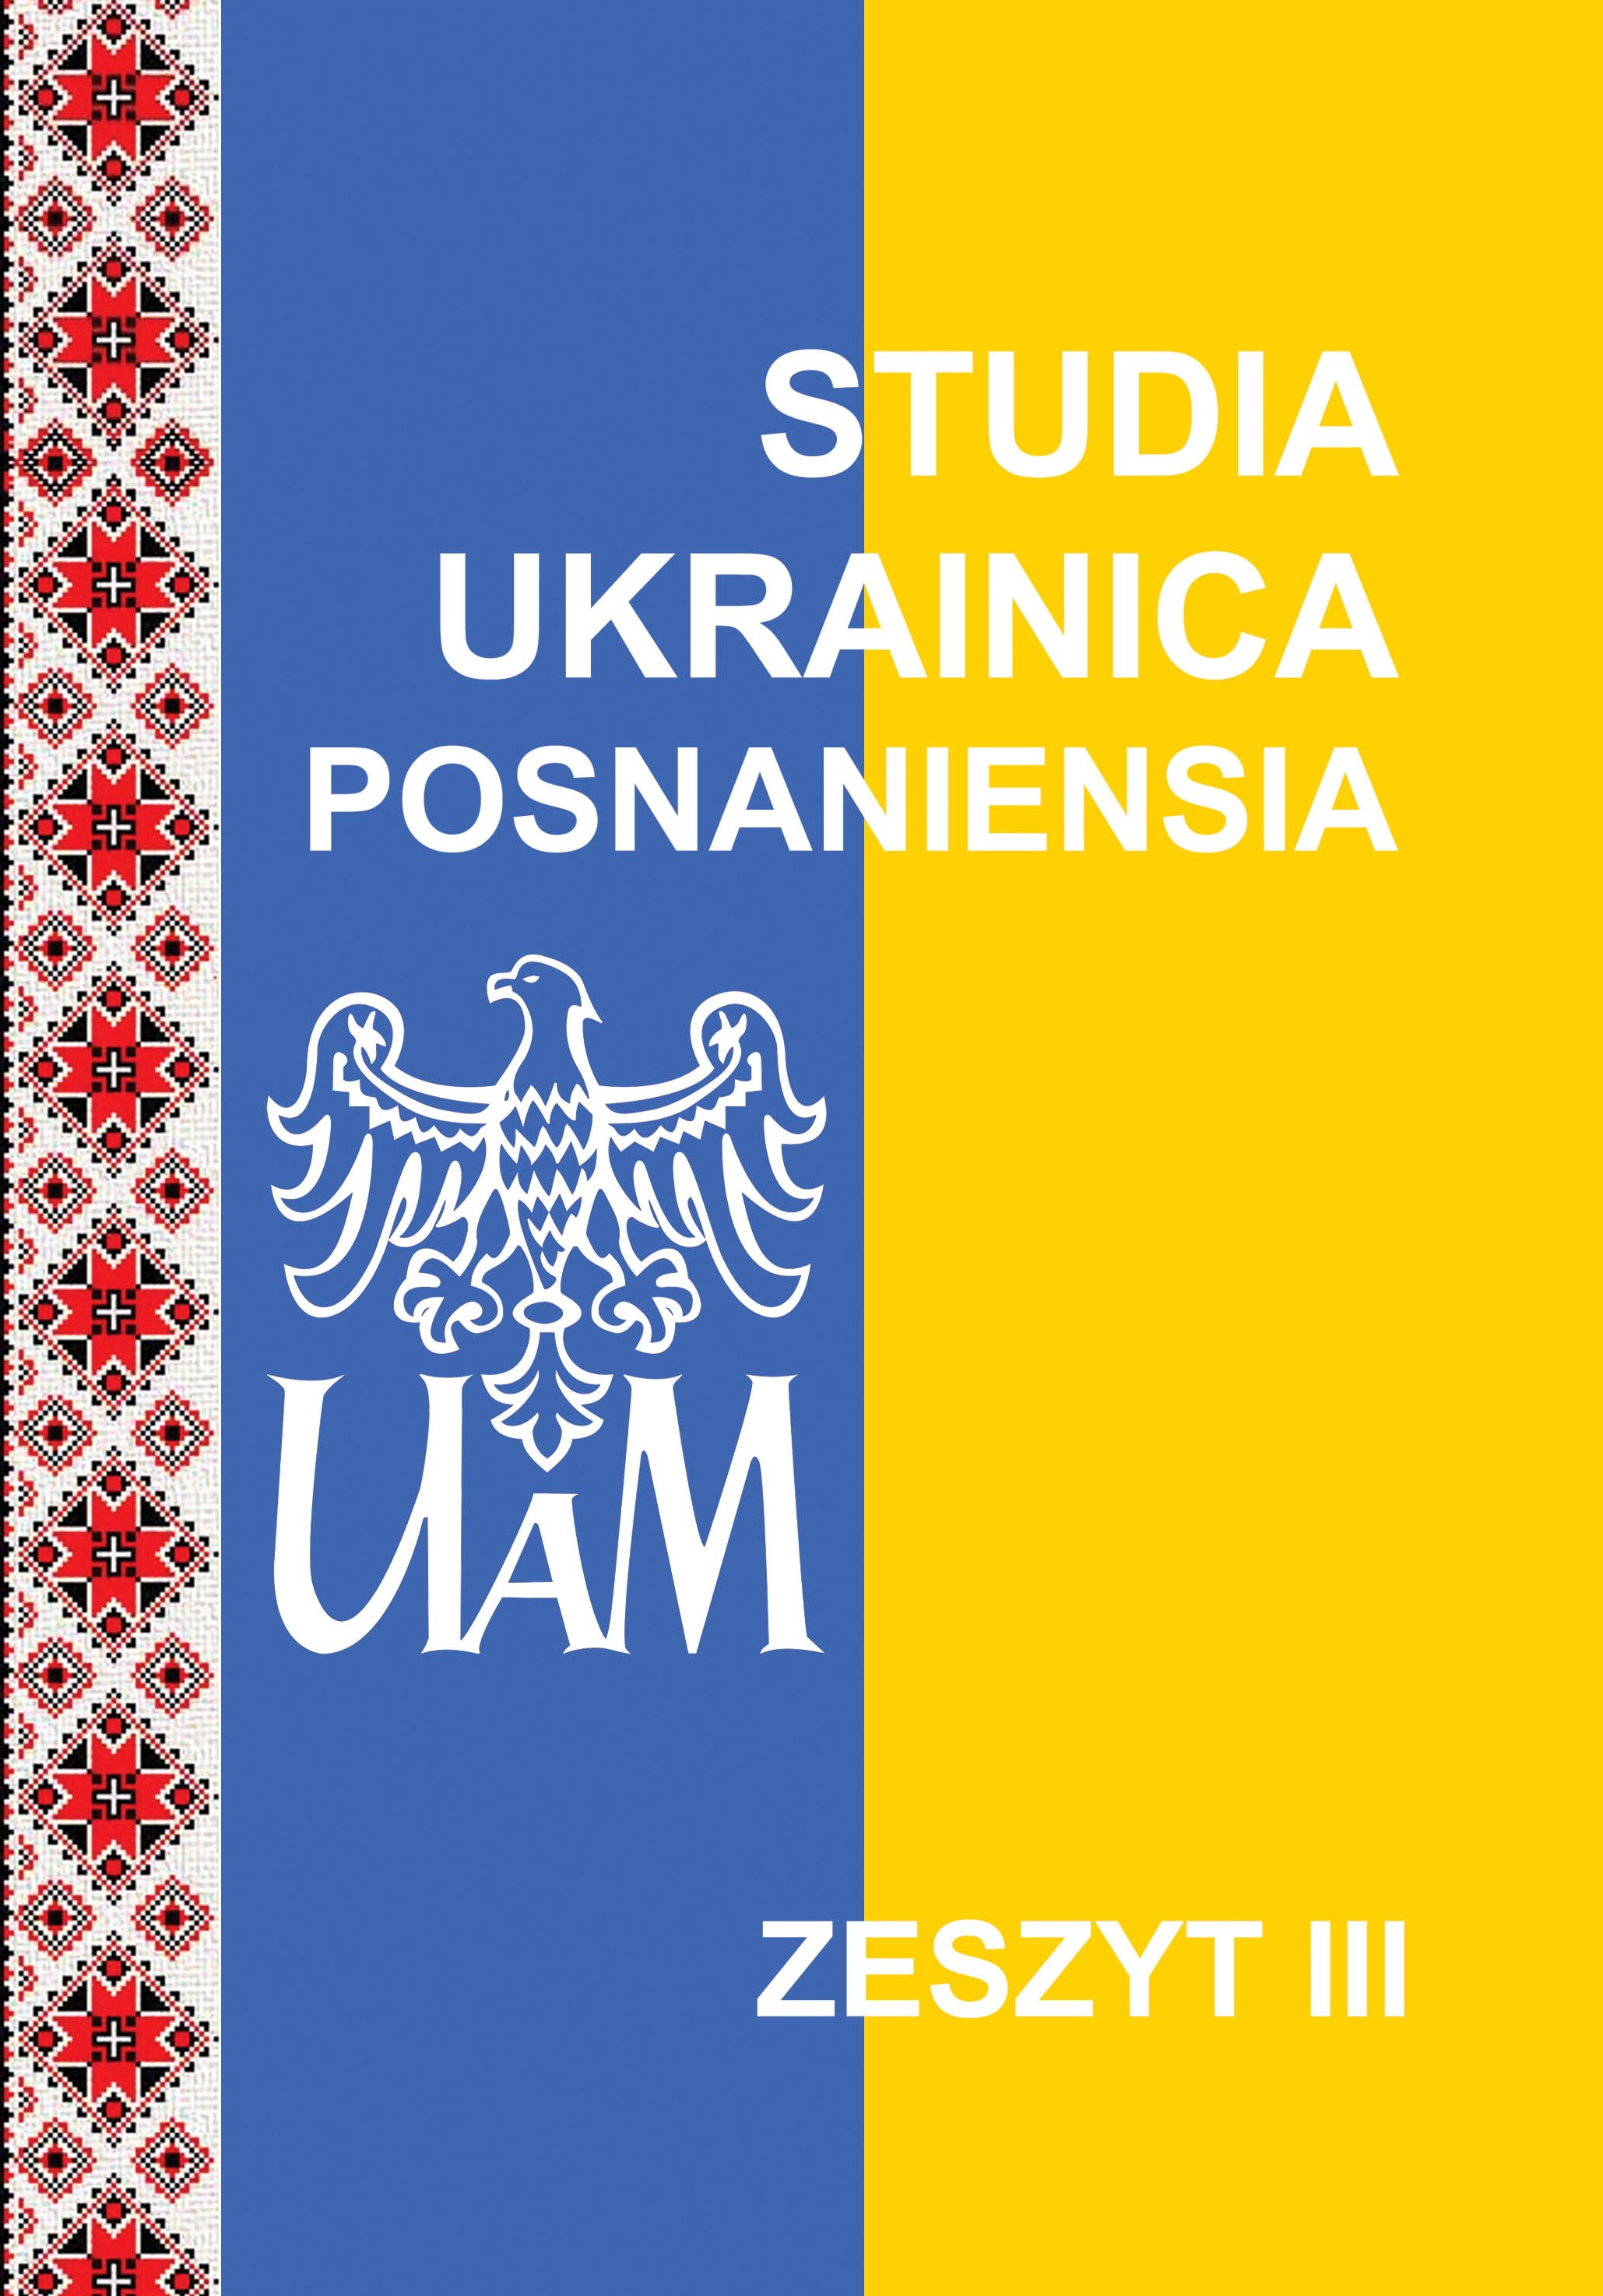 UKRAINIAN NOUN AS A SYMBOL OF NATIONAL IDENTITY Cover Image